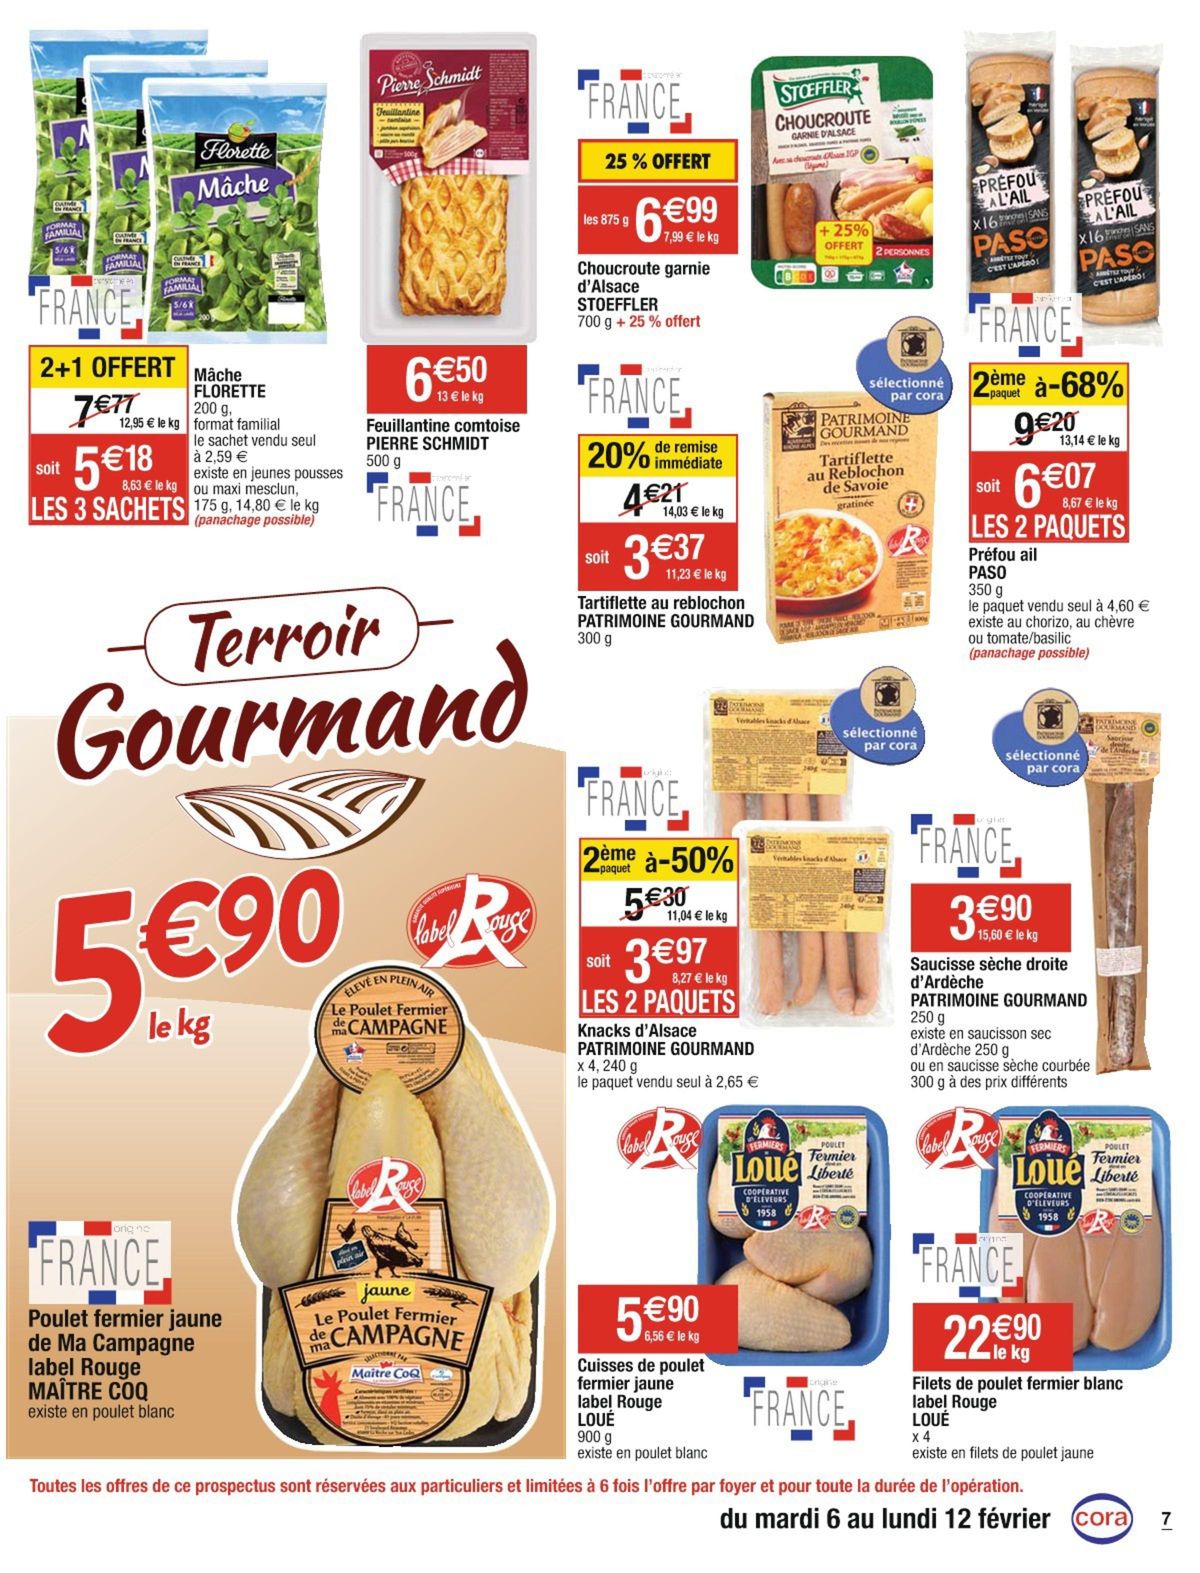 Catalogue Terroir gourmand, page 00025